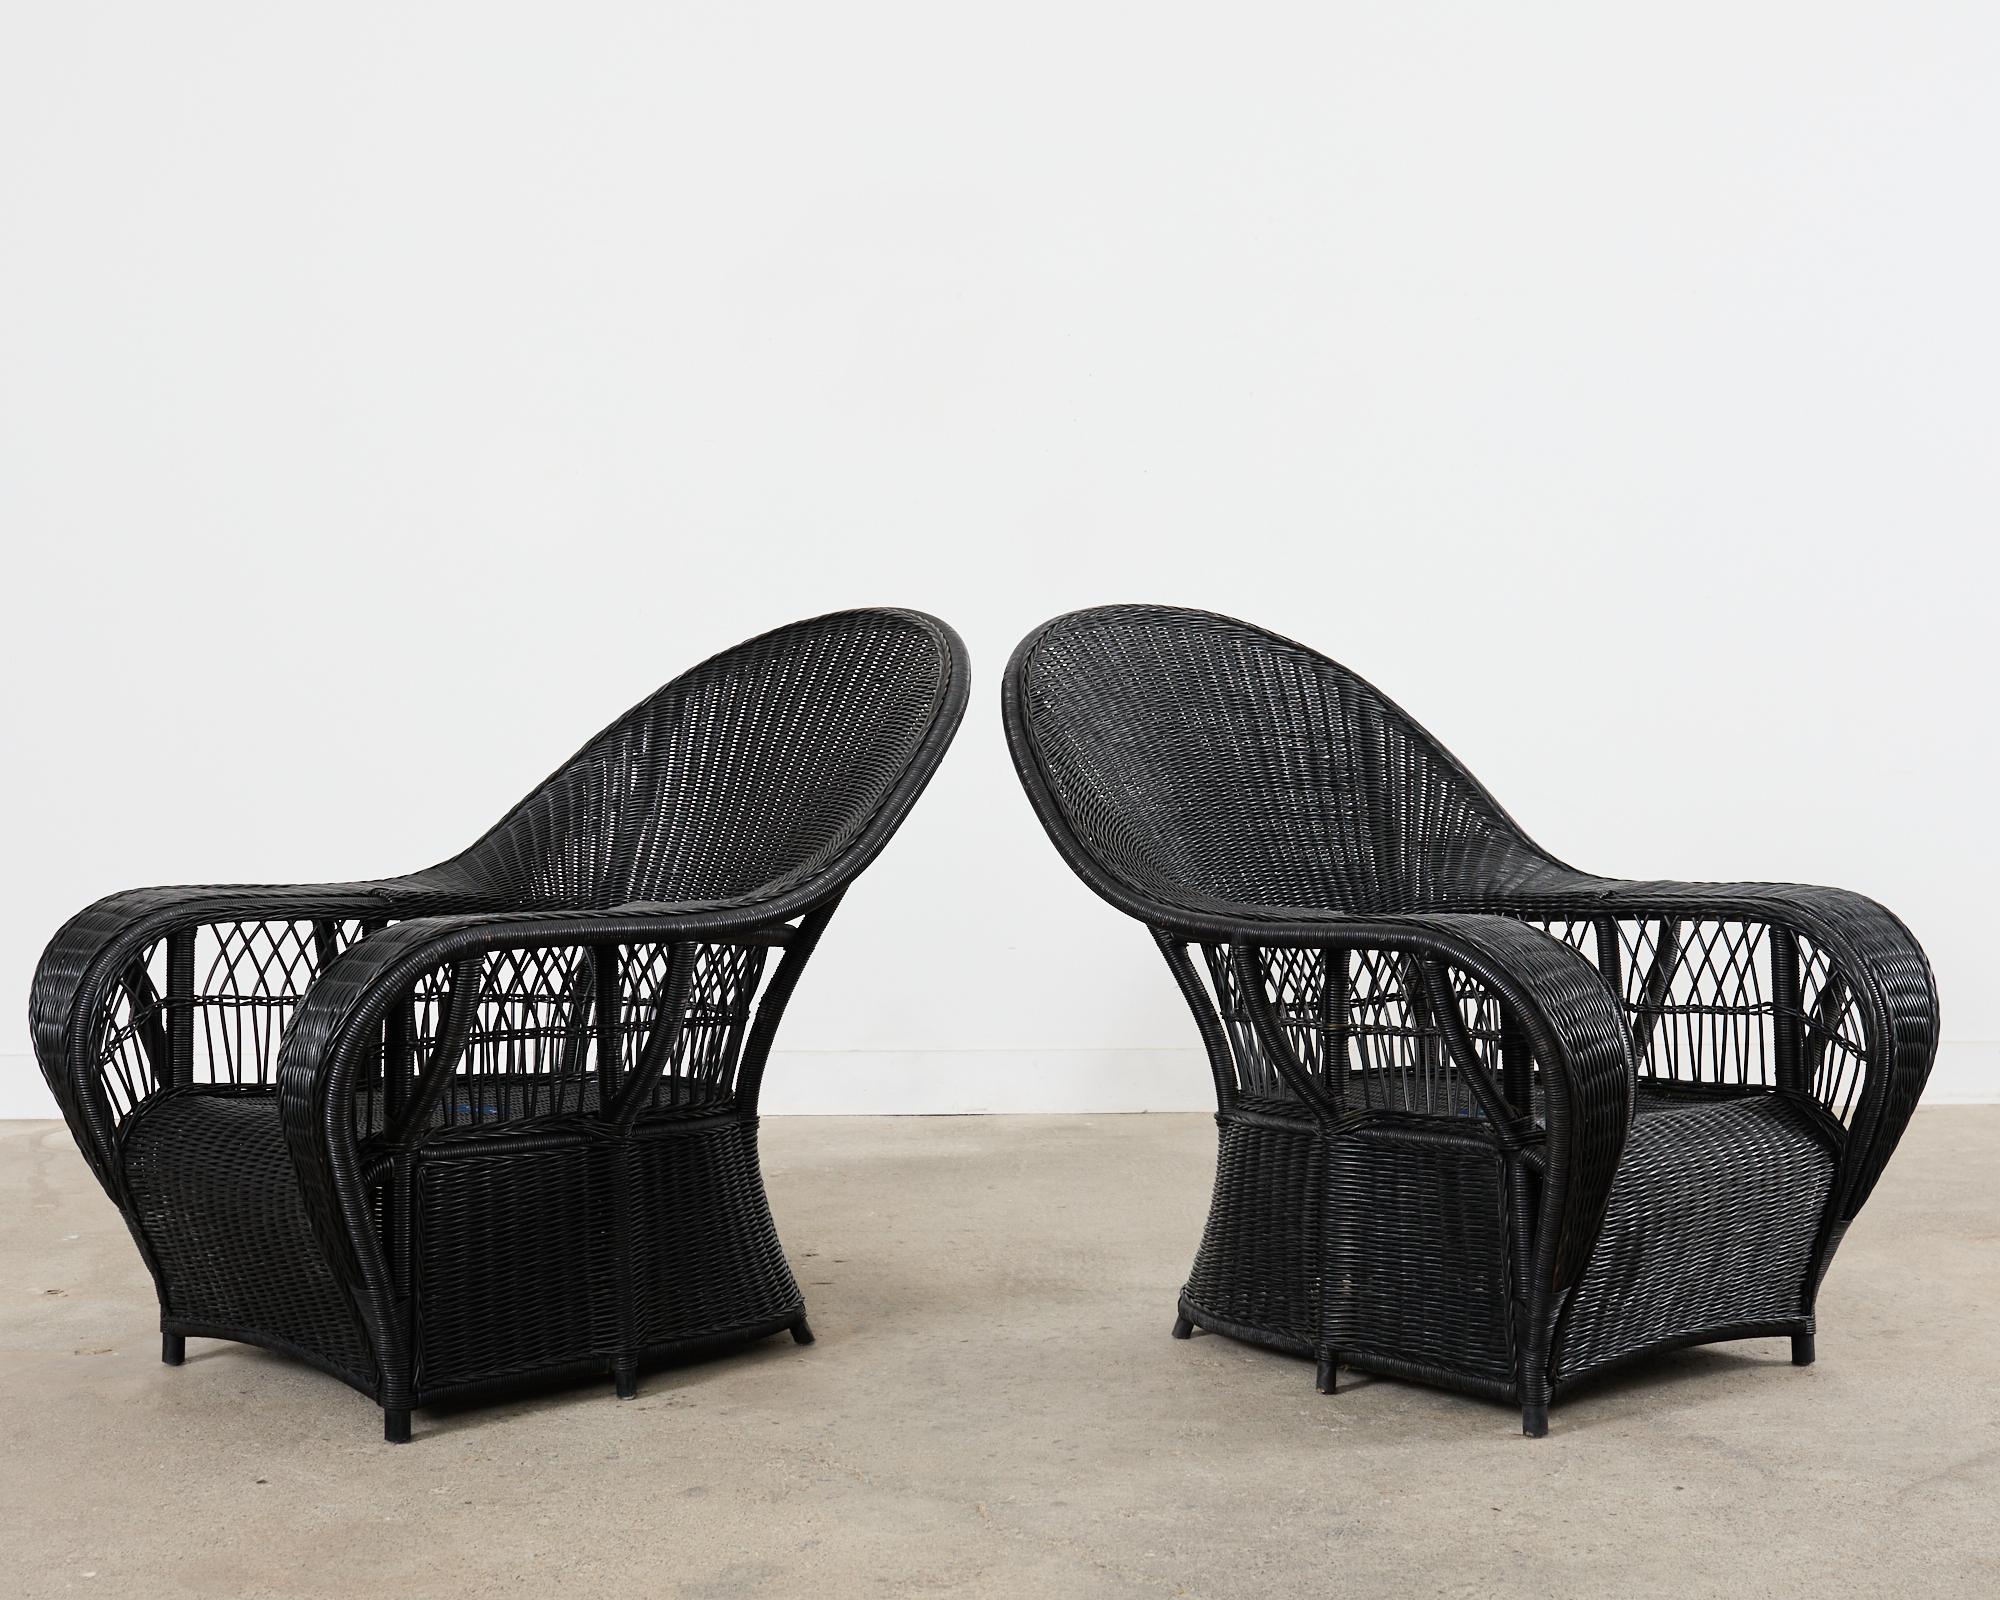 20th Century Pair of Ralph Lauren Wicker Rattan Garden Lounge Chairs For Sale